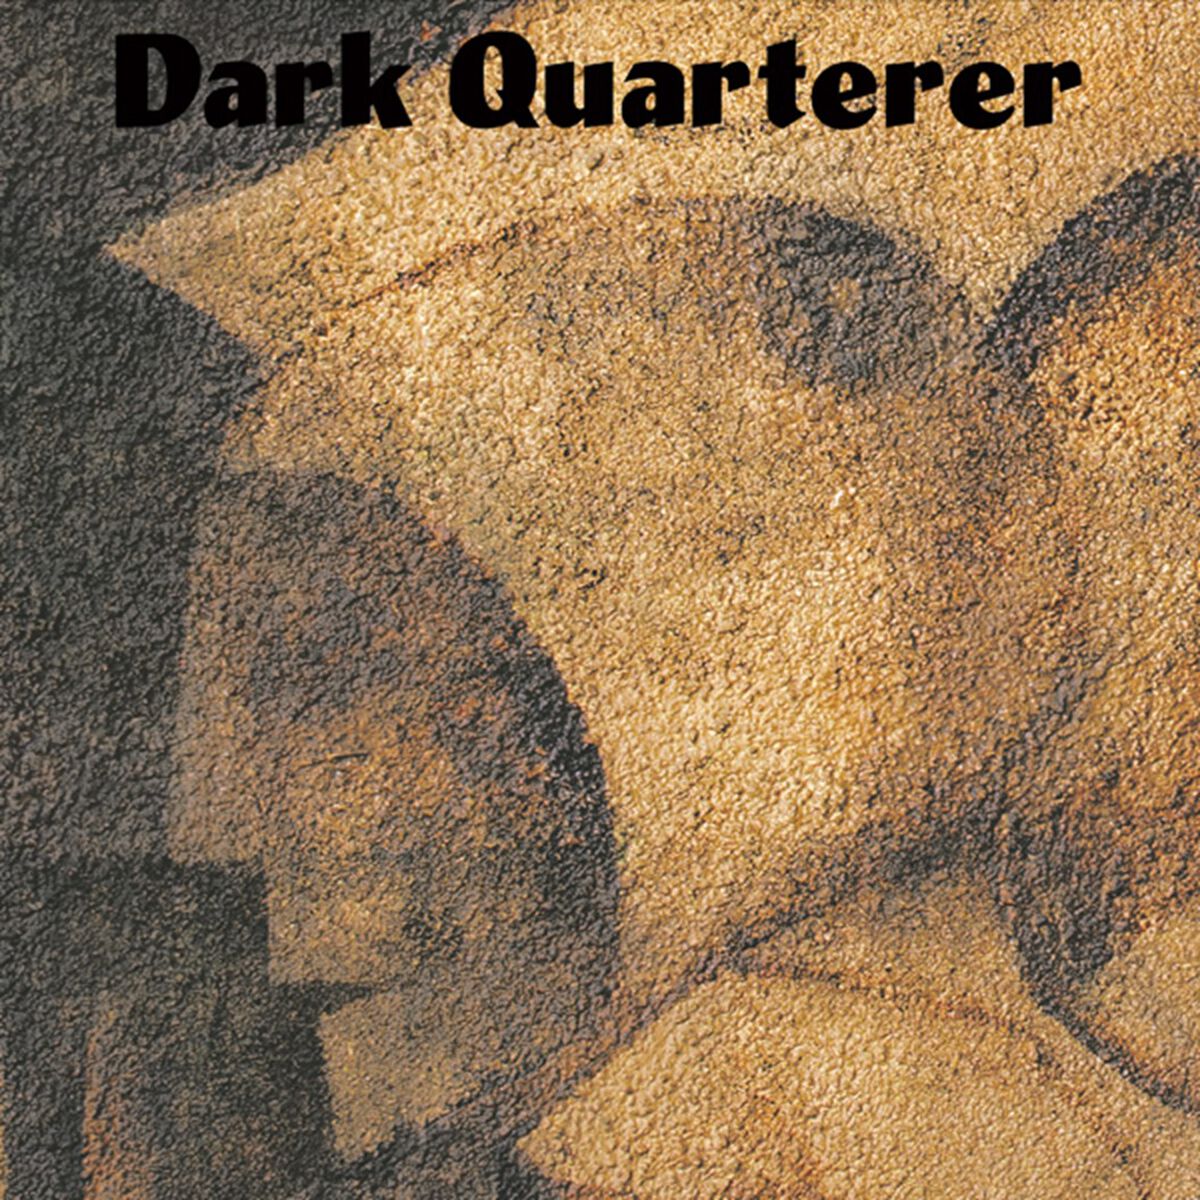 Dark Quarterer von Dark Quarterer - LP (Standard)